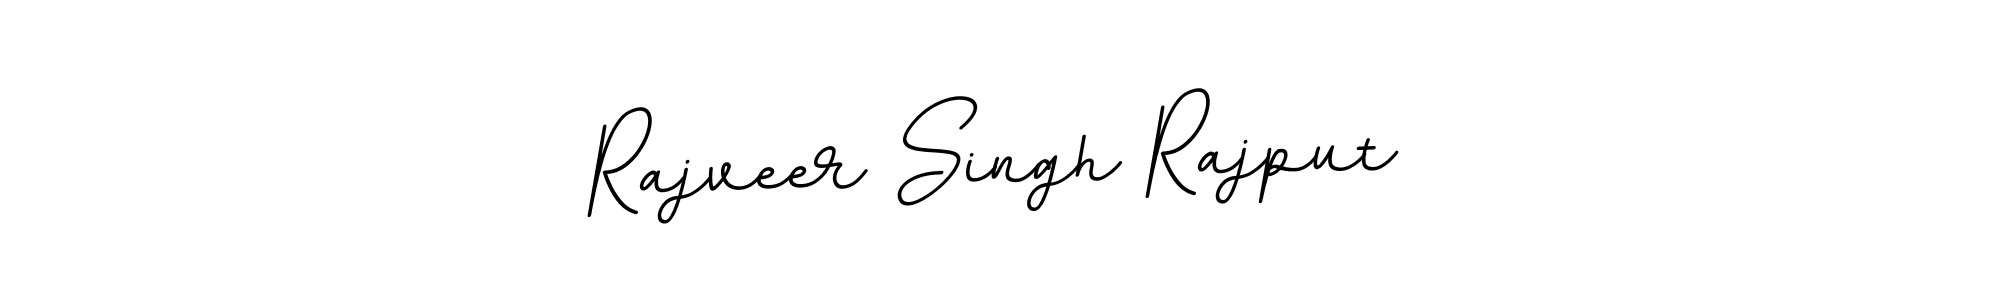 How to Draw Rajveer Singh Rajput signature style? BallpointsItalic-DORy9 is a latest design signature styles for name Rajveer Singh Rajput. Rajveer Singh Rajput signature style 11 images and pictures png